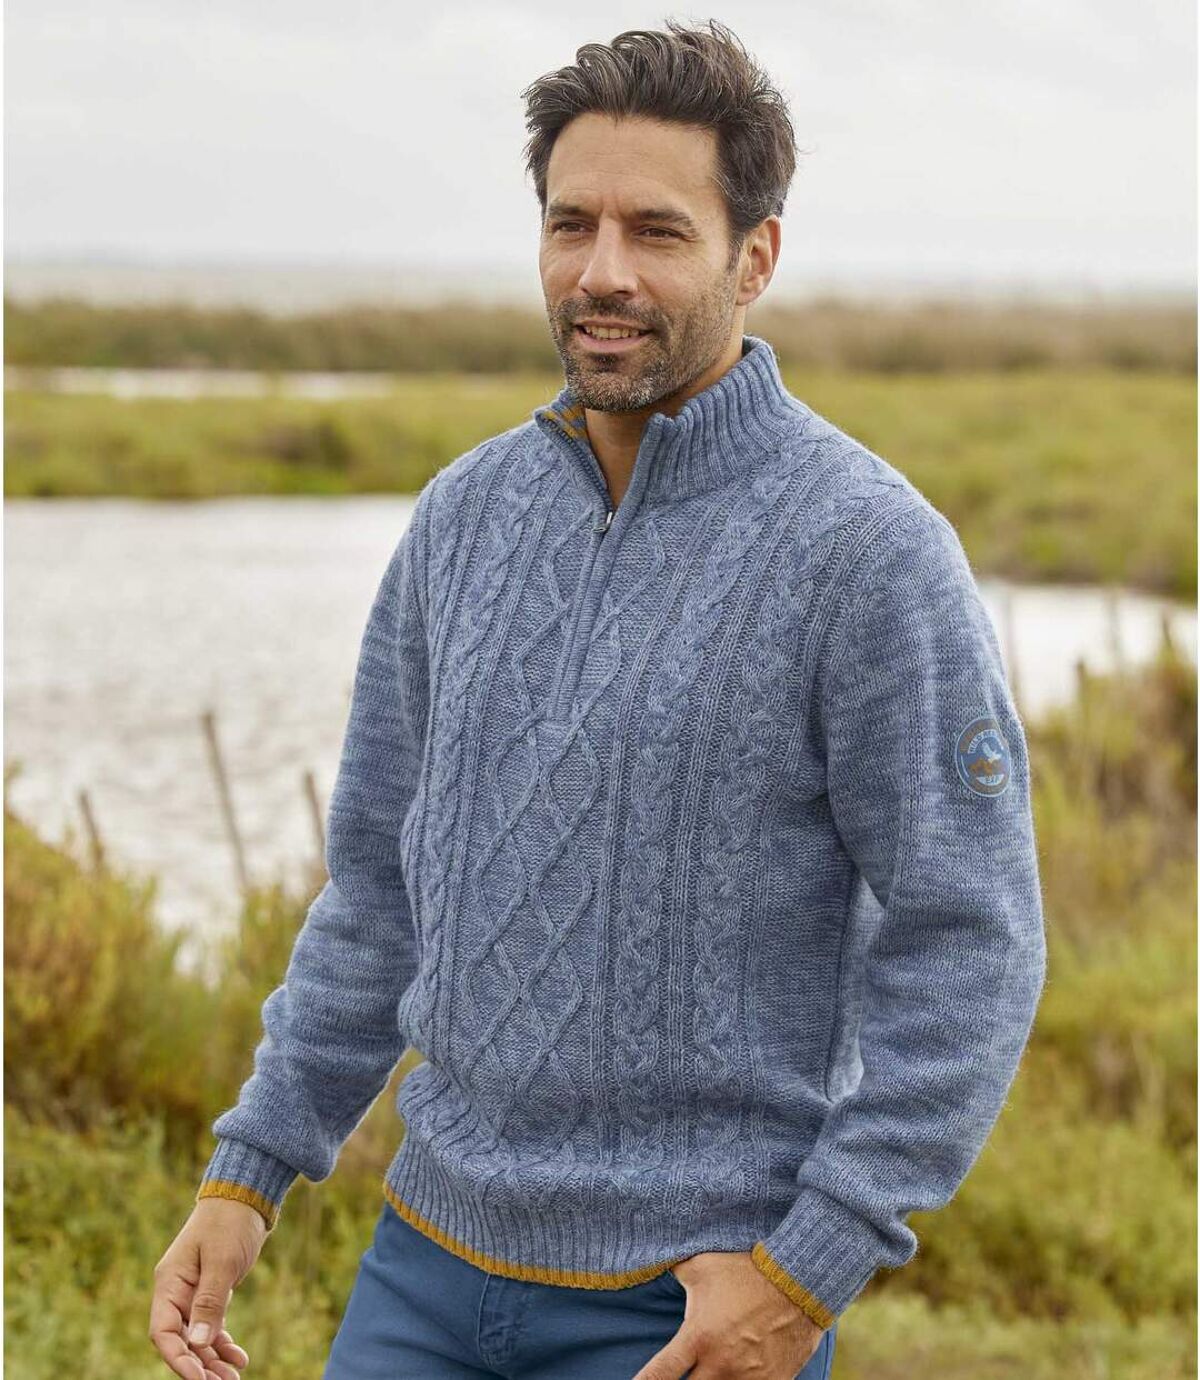 Melírovaný pletený sveter s golierom na zips Winter Atlas For Men